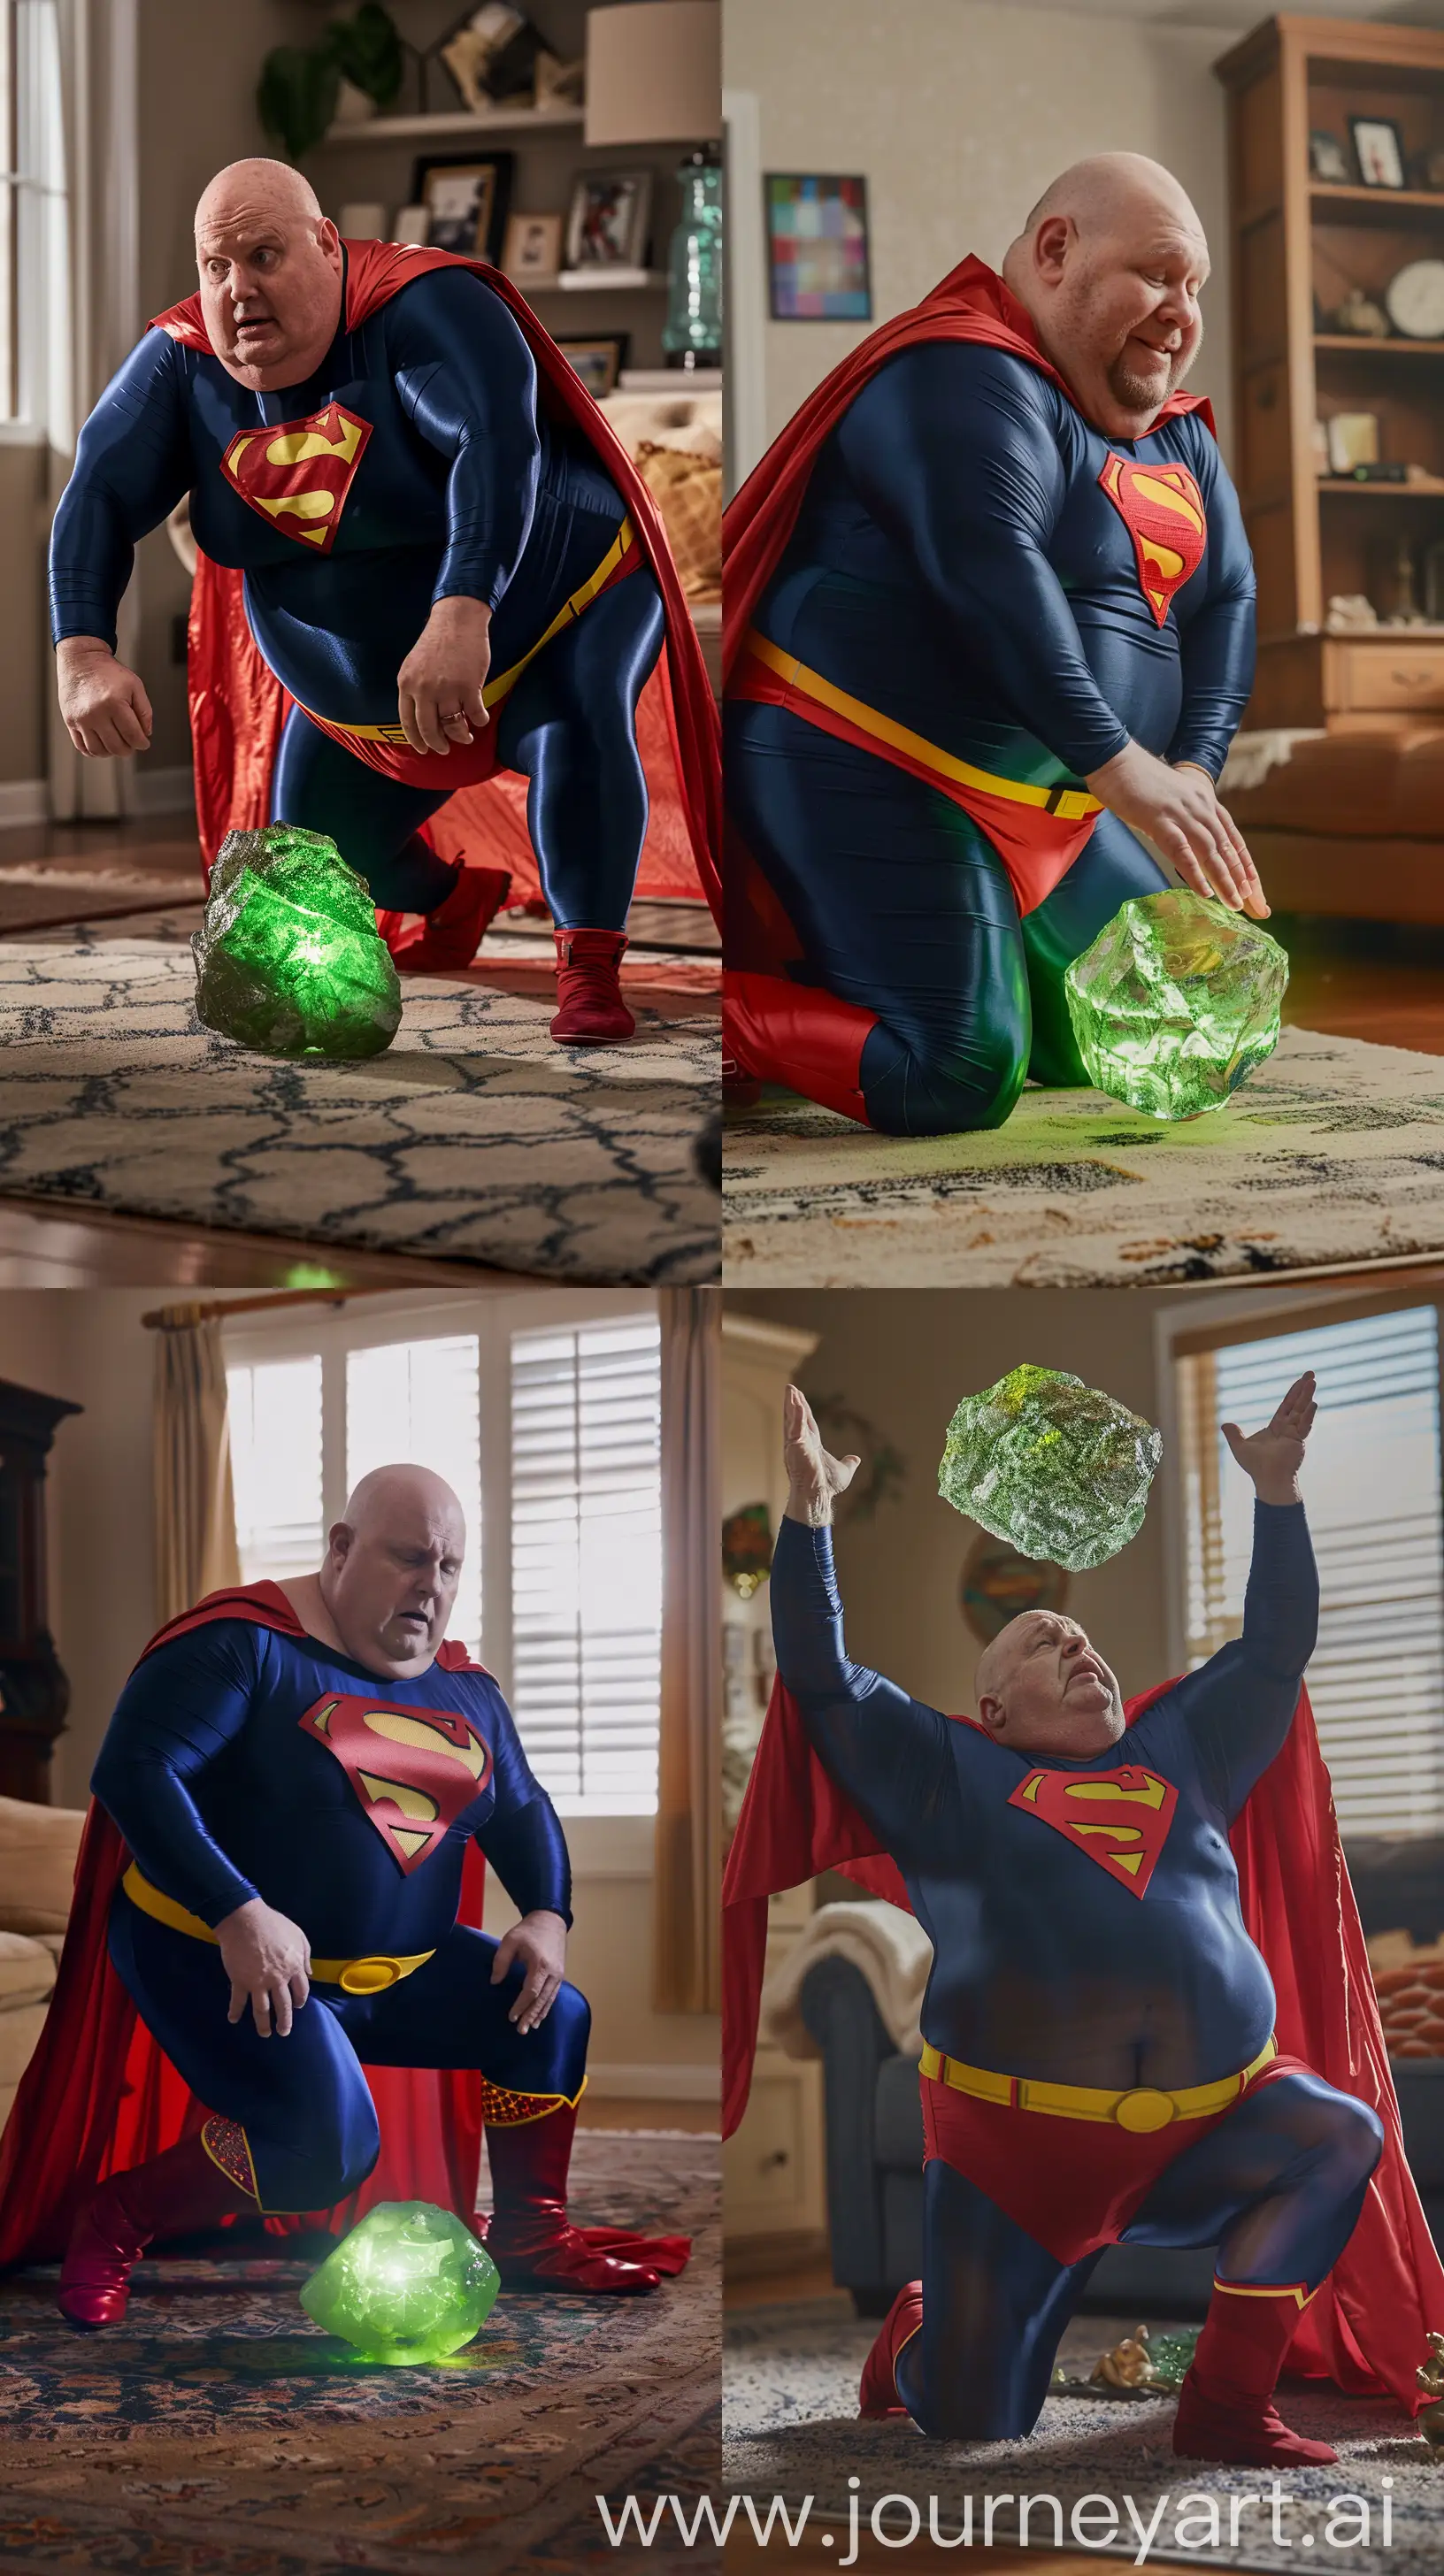 Senior-Gentleman-as-Superhero-in-Action-with-Luminous-Orb